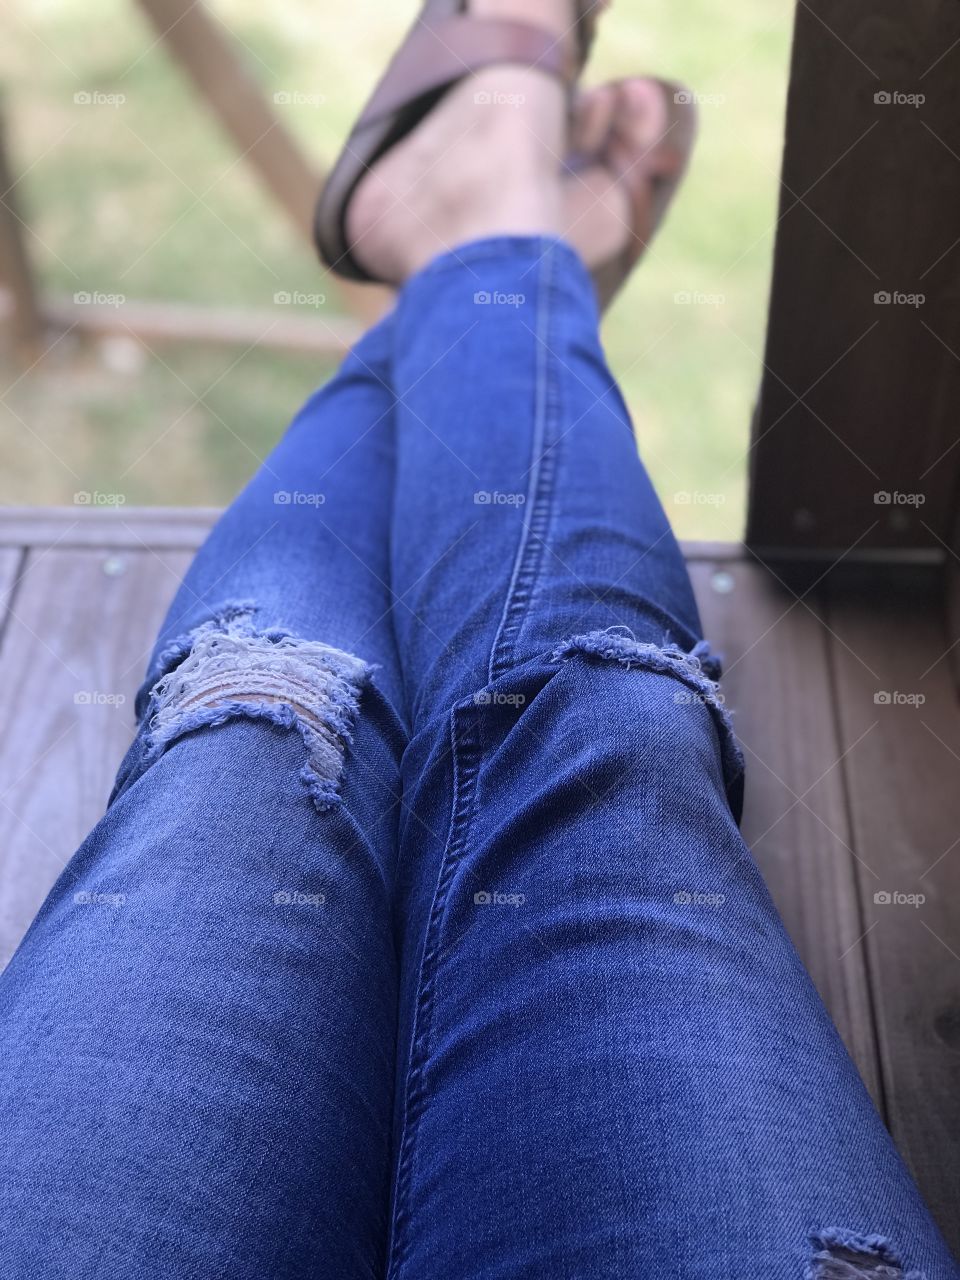 Blue jeans 